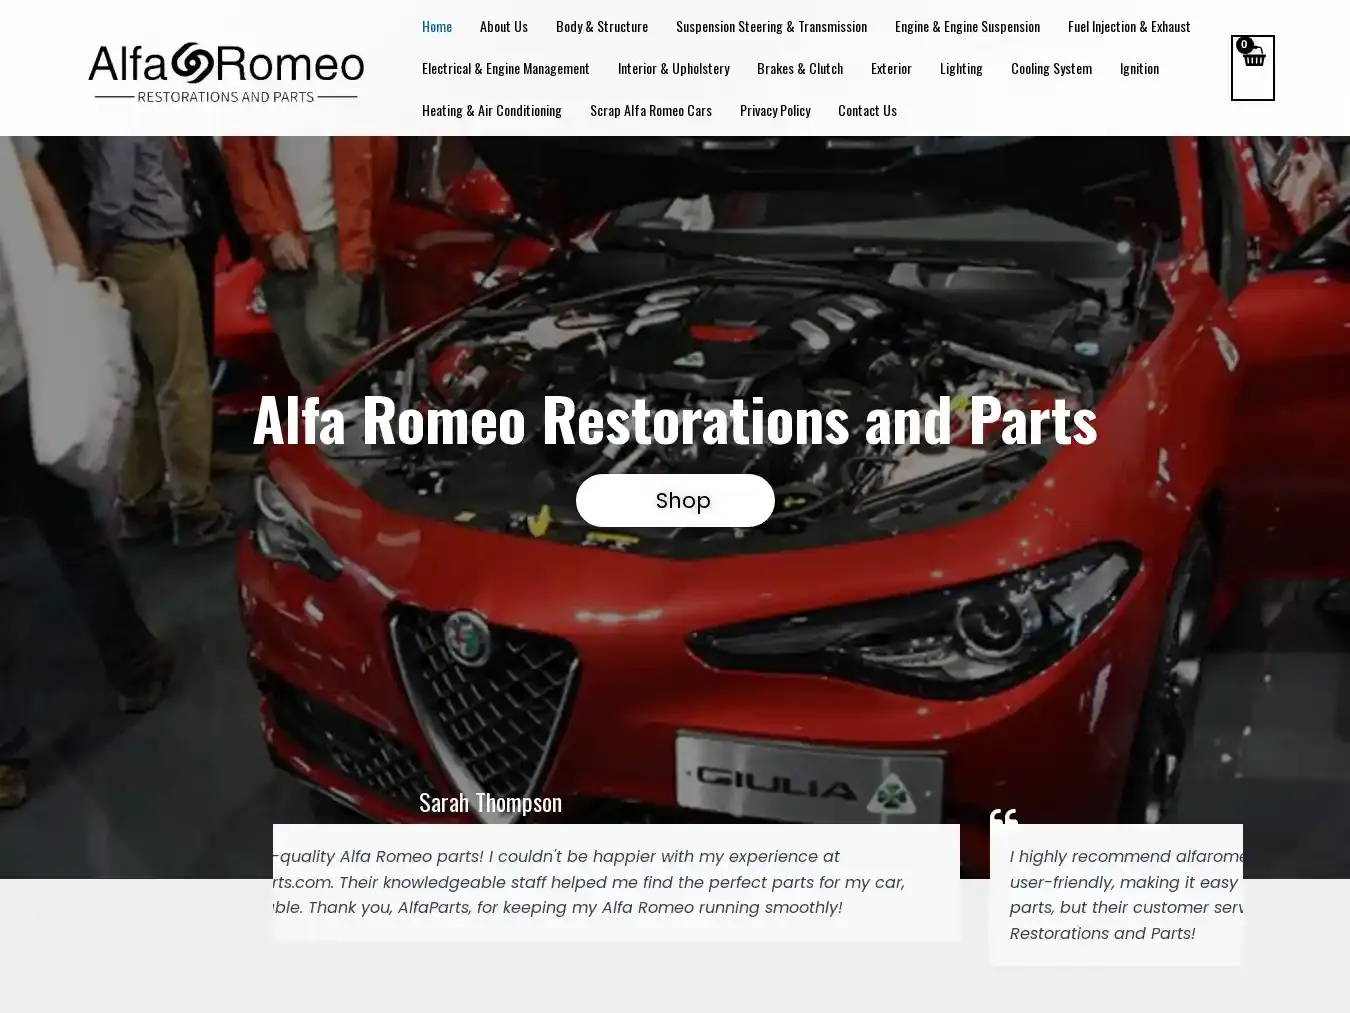 Alfaromeorestorationsandparts.com Fraudulent Automobile website.